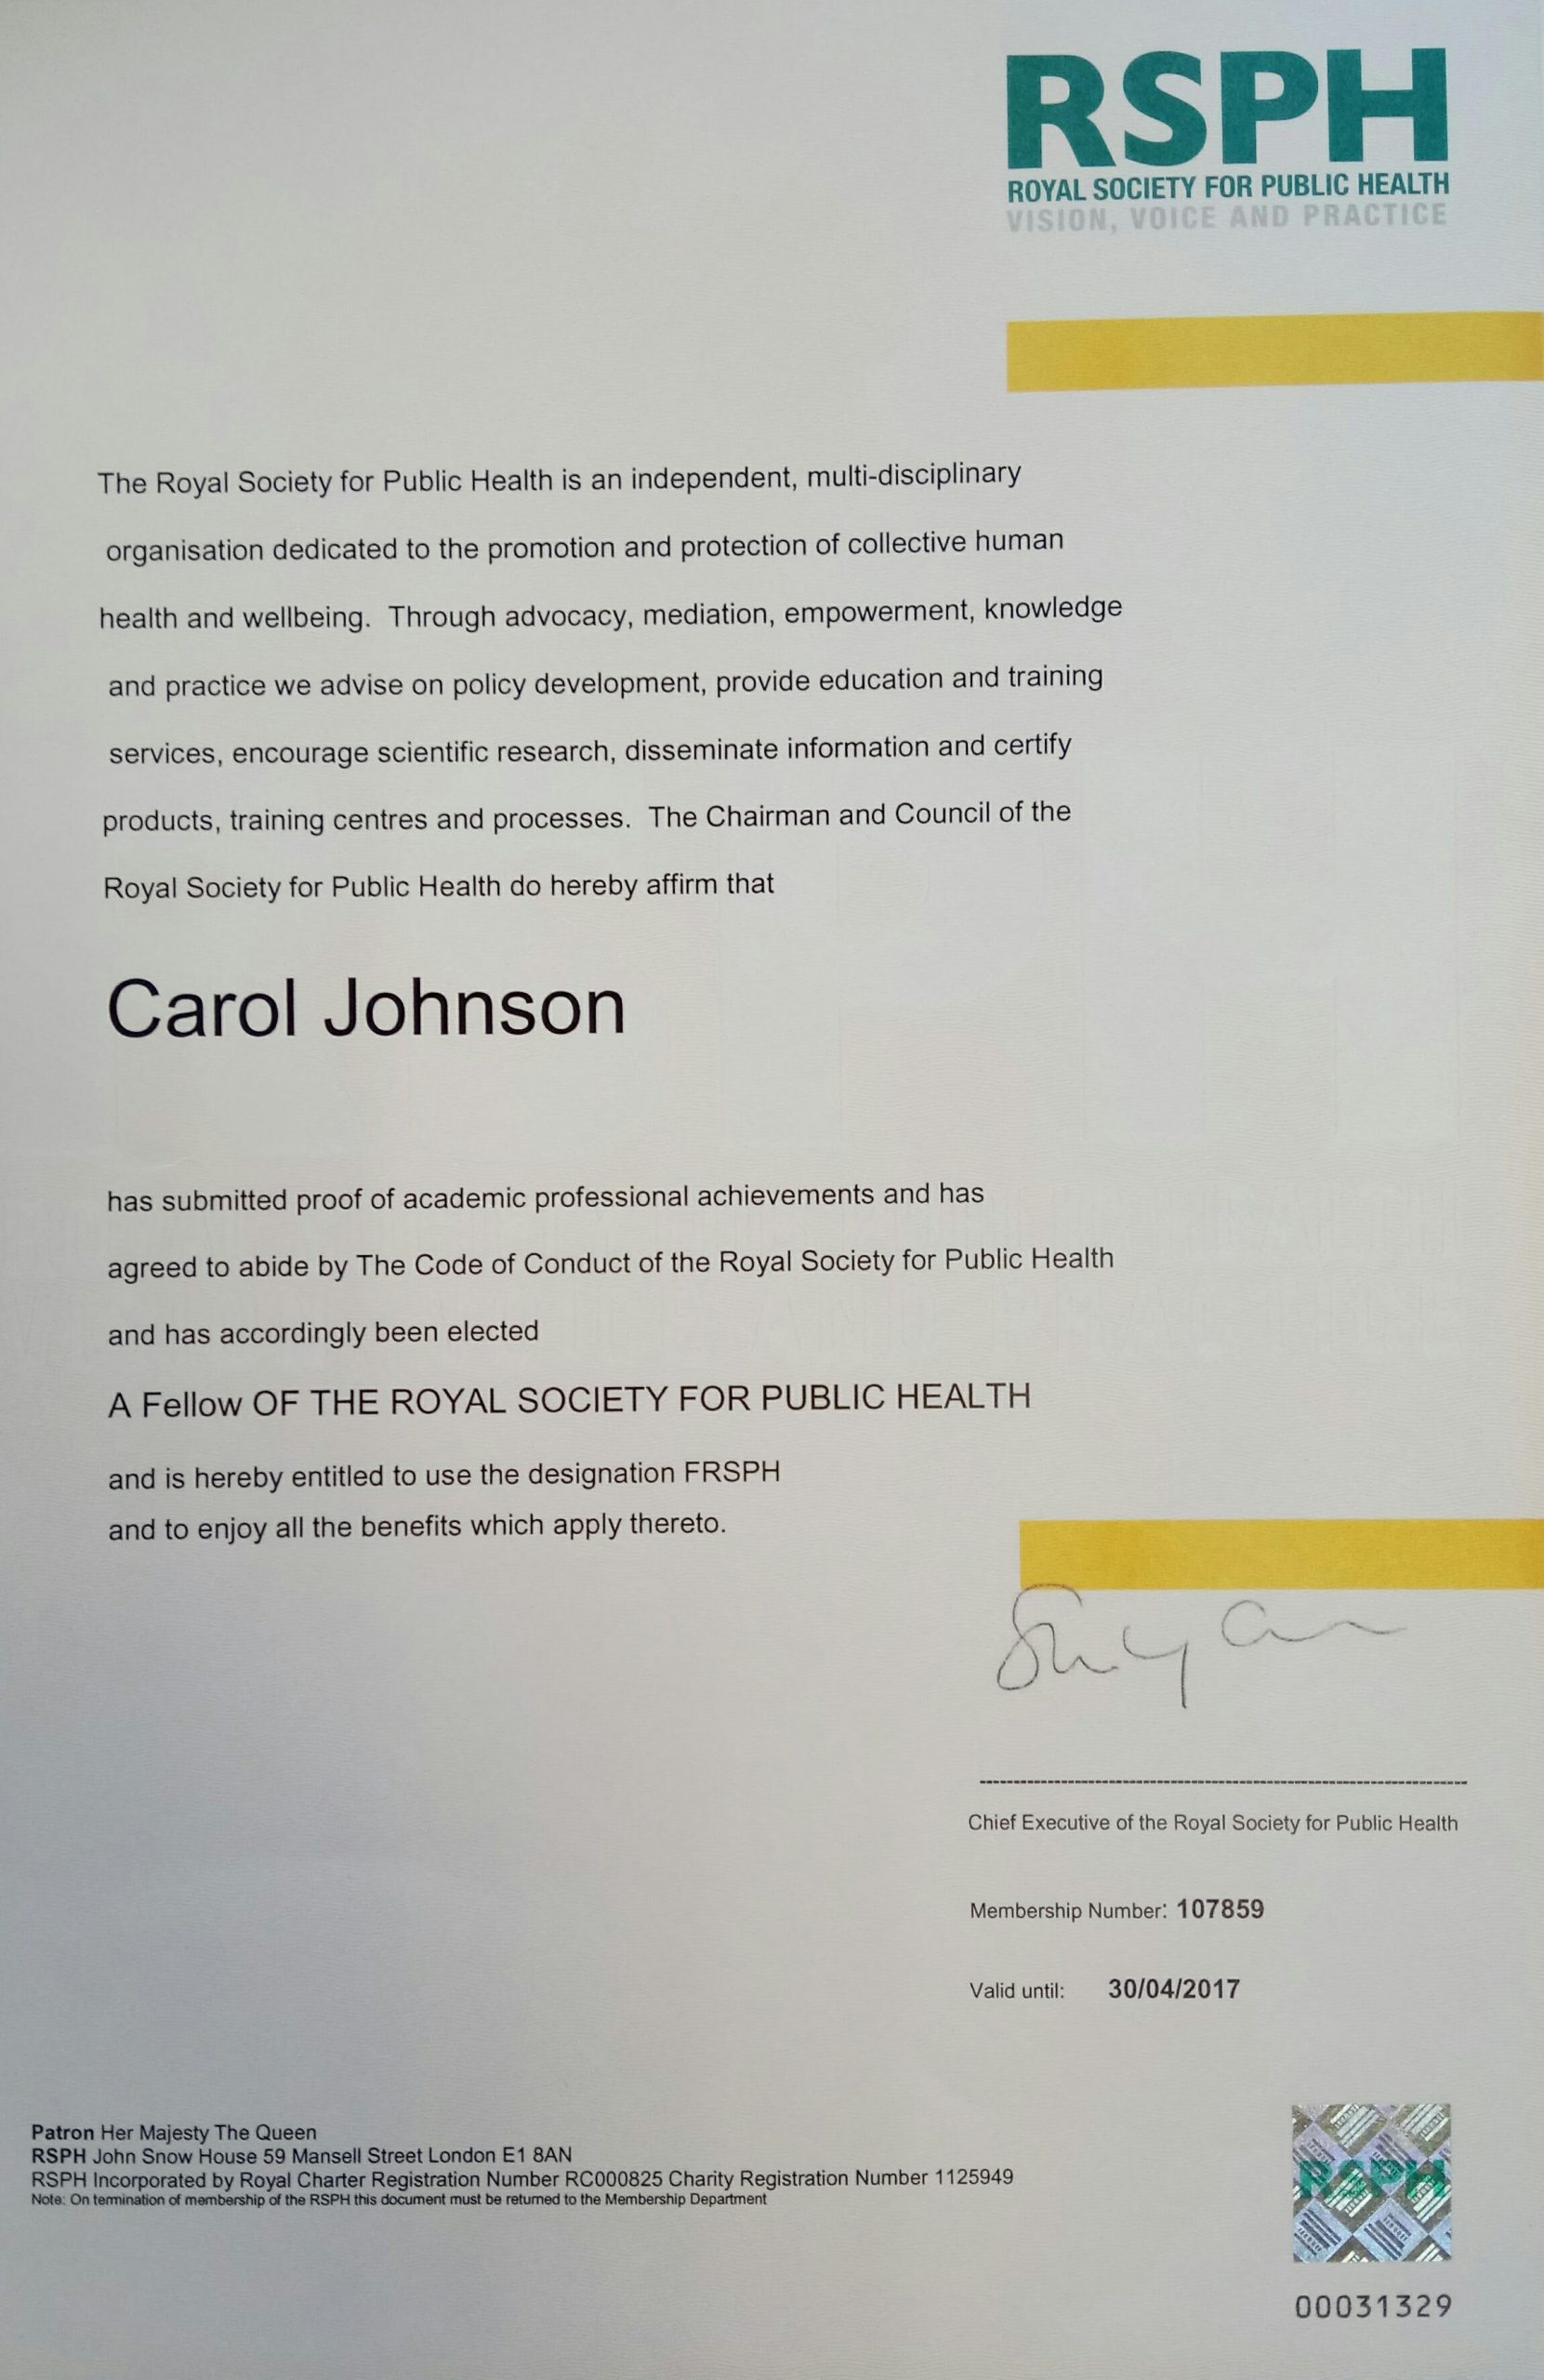 Fellow of The Royal Society for Public Health - Trichologist Dublin